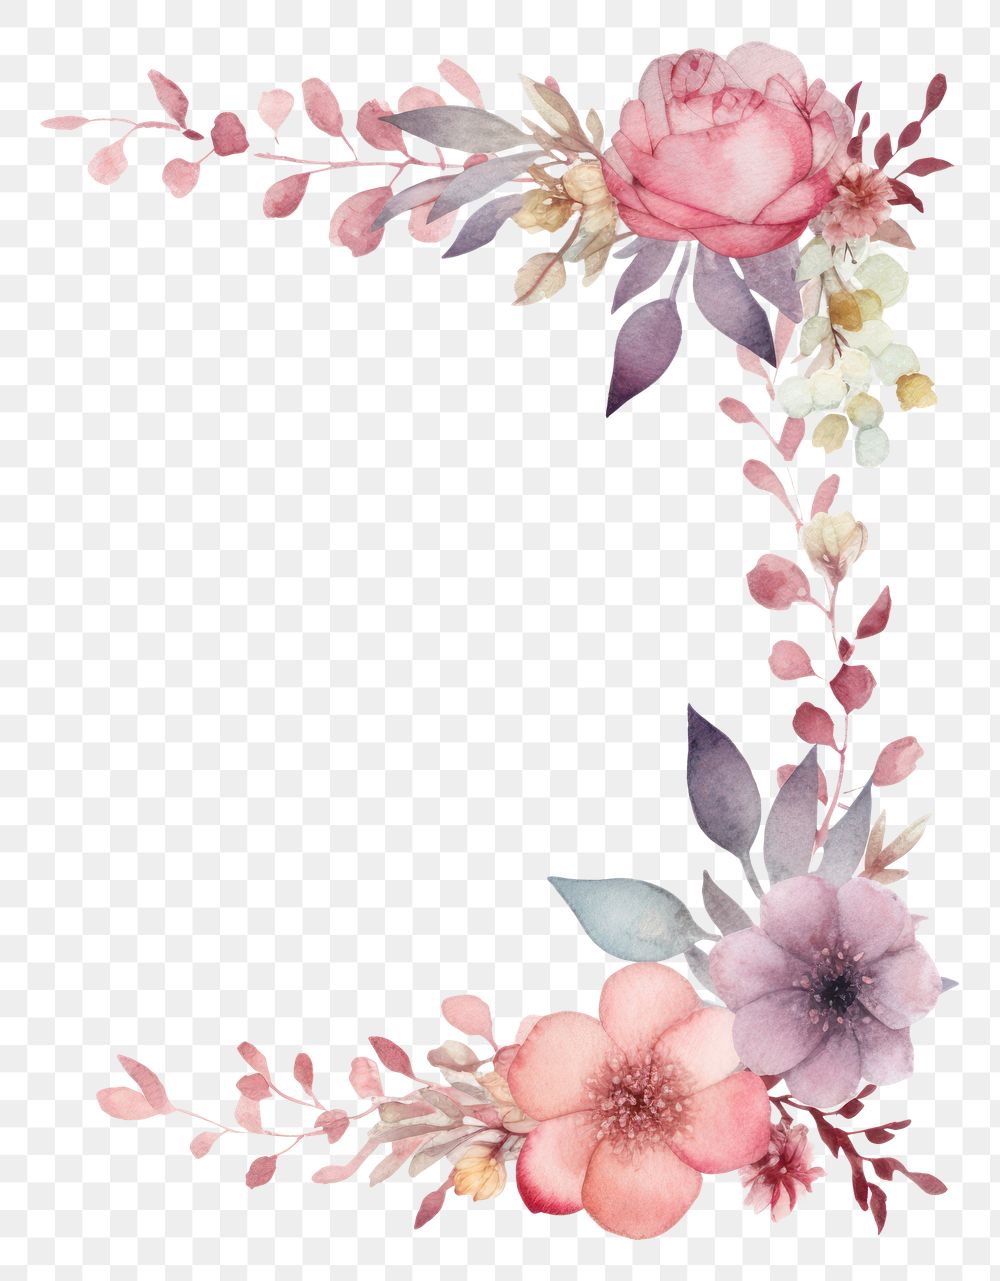 PNG Funeral border watercolor pattern flower wreath.